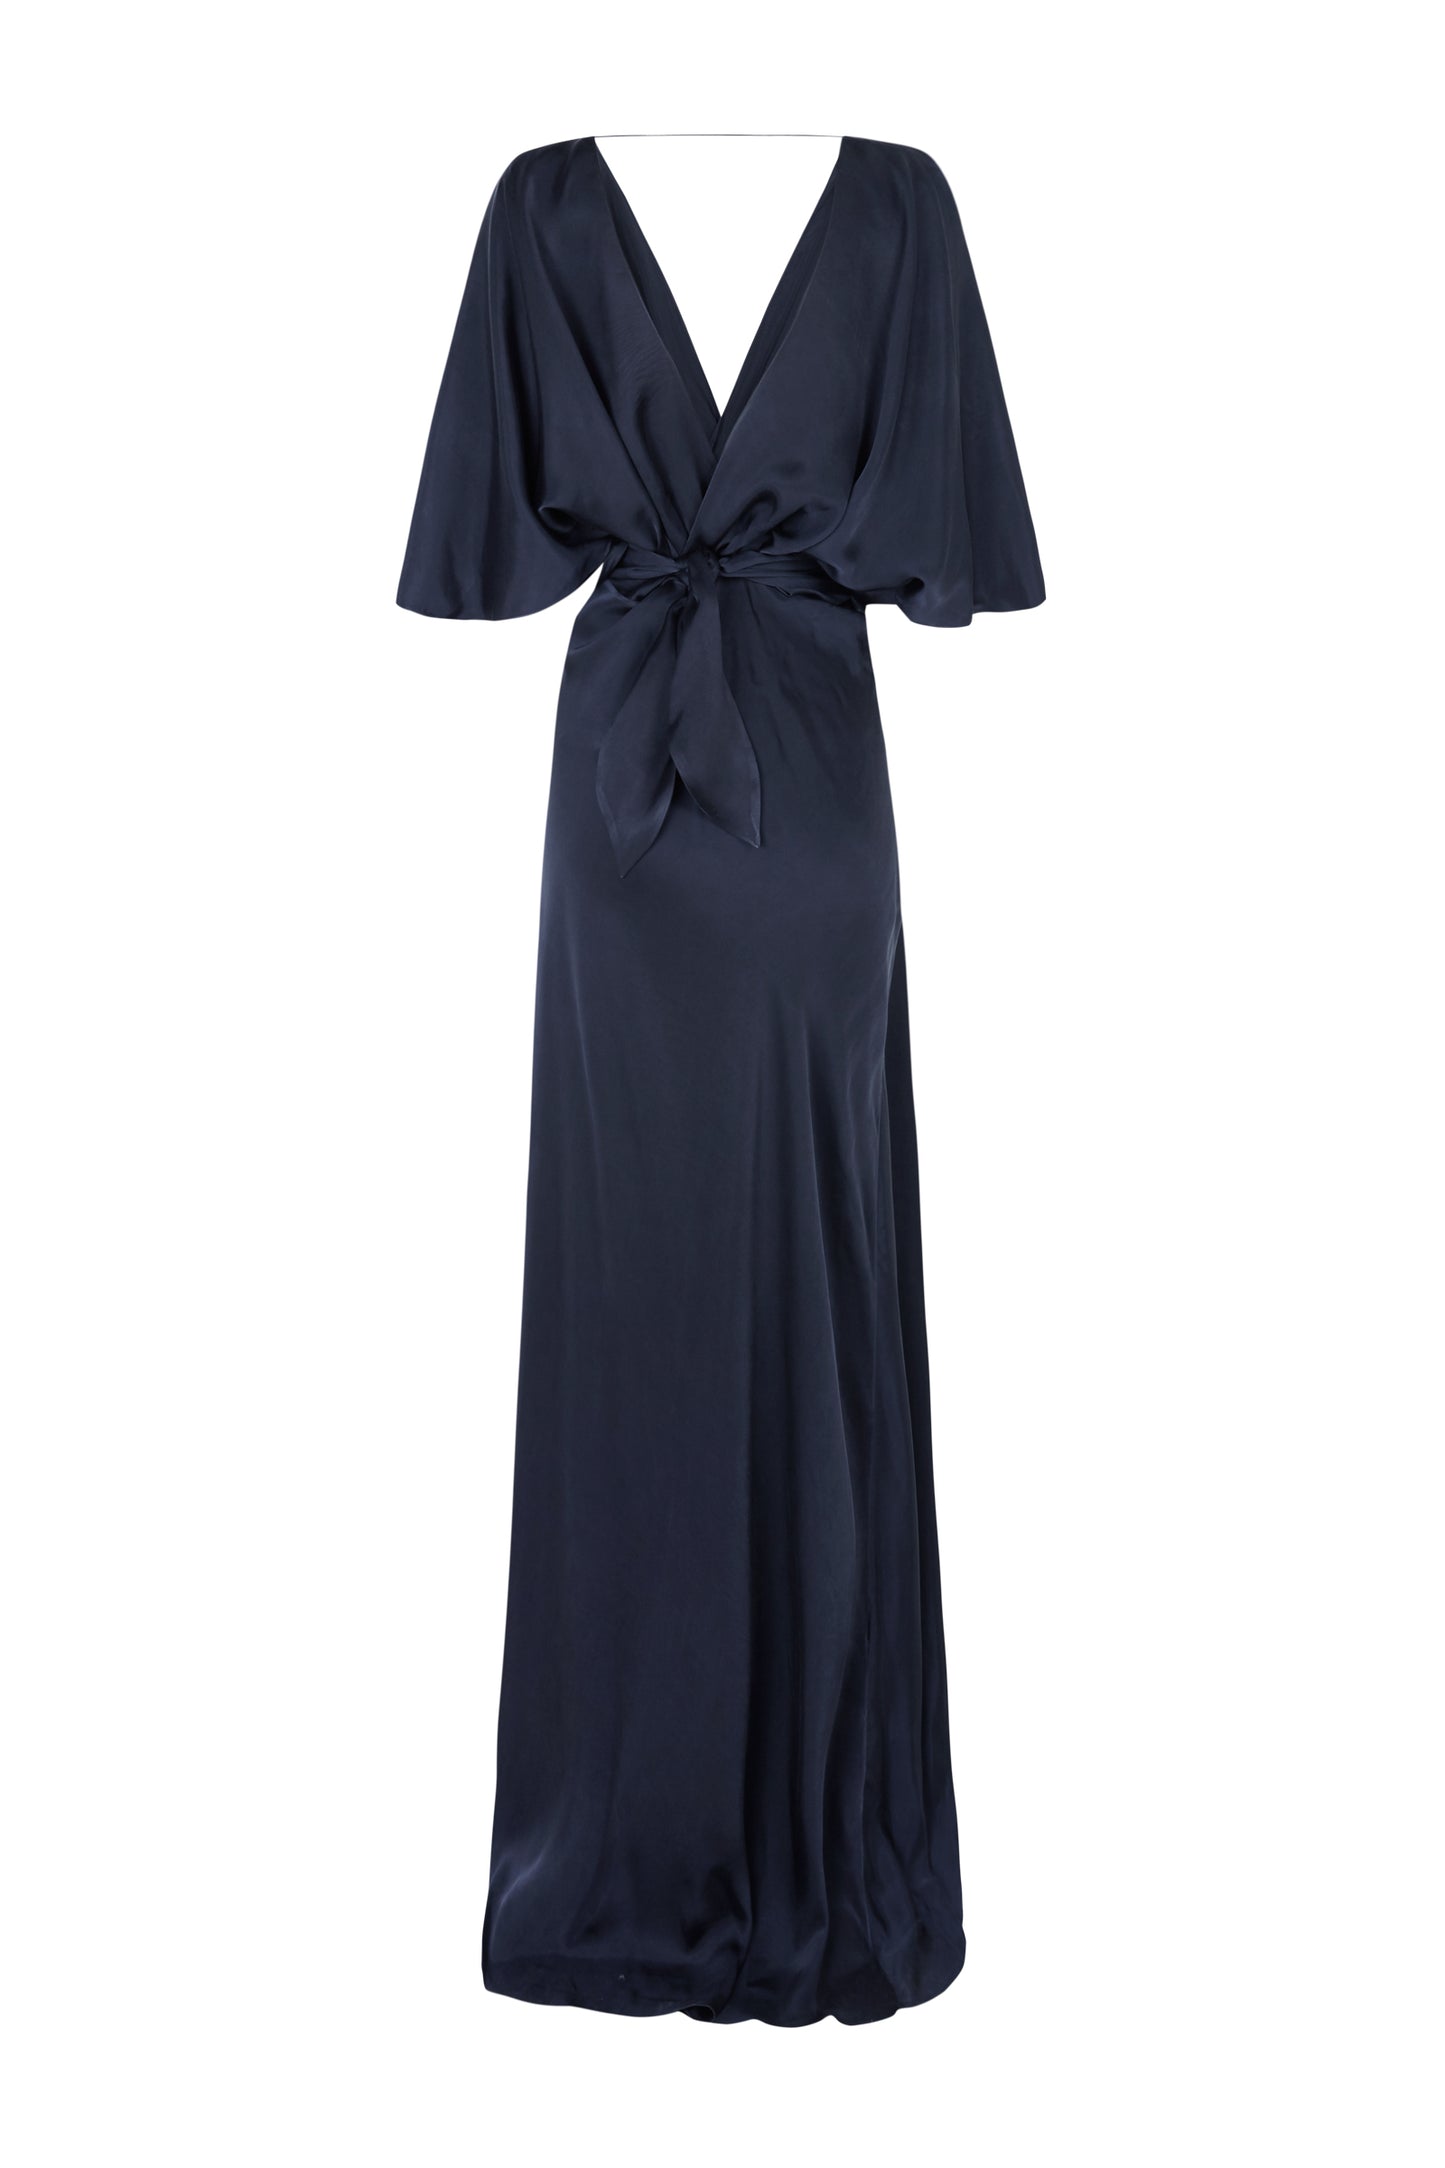 Martina, long blue nero cupro dress